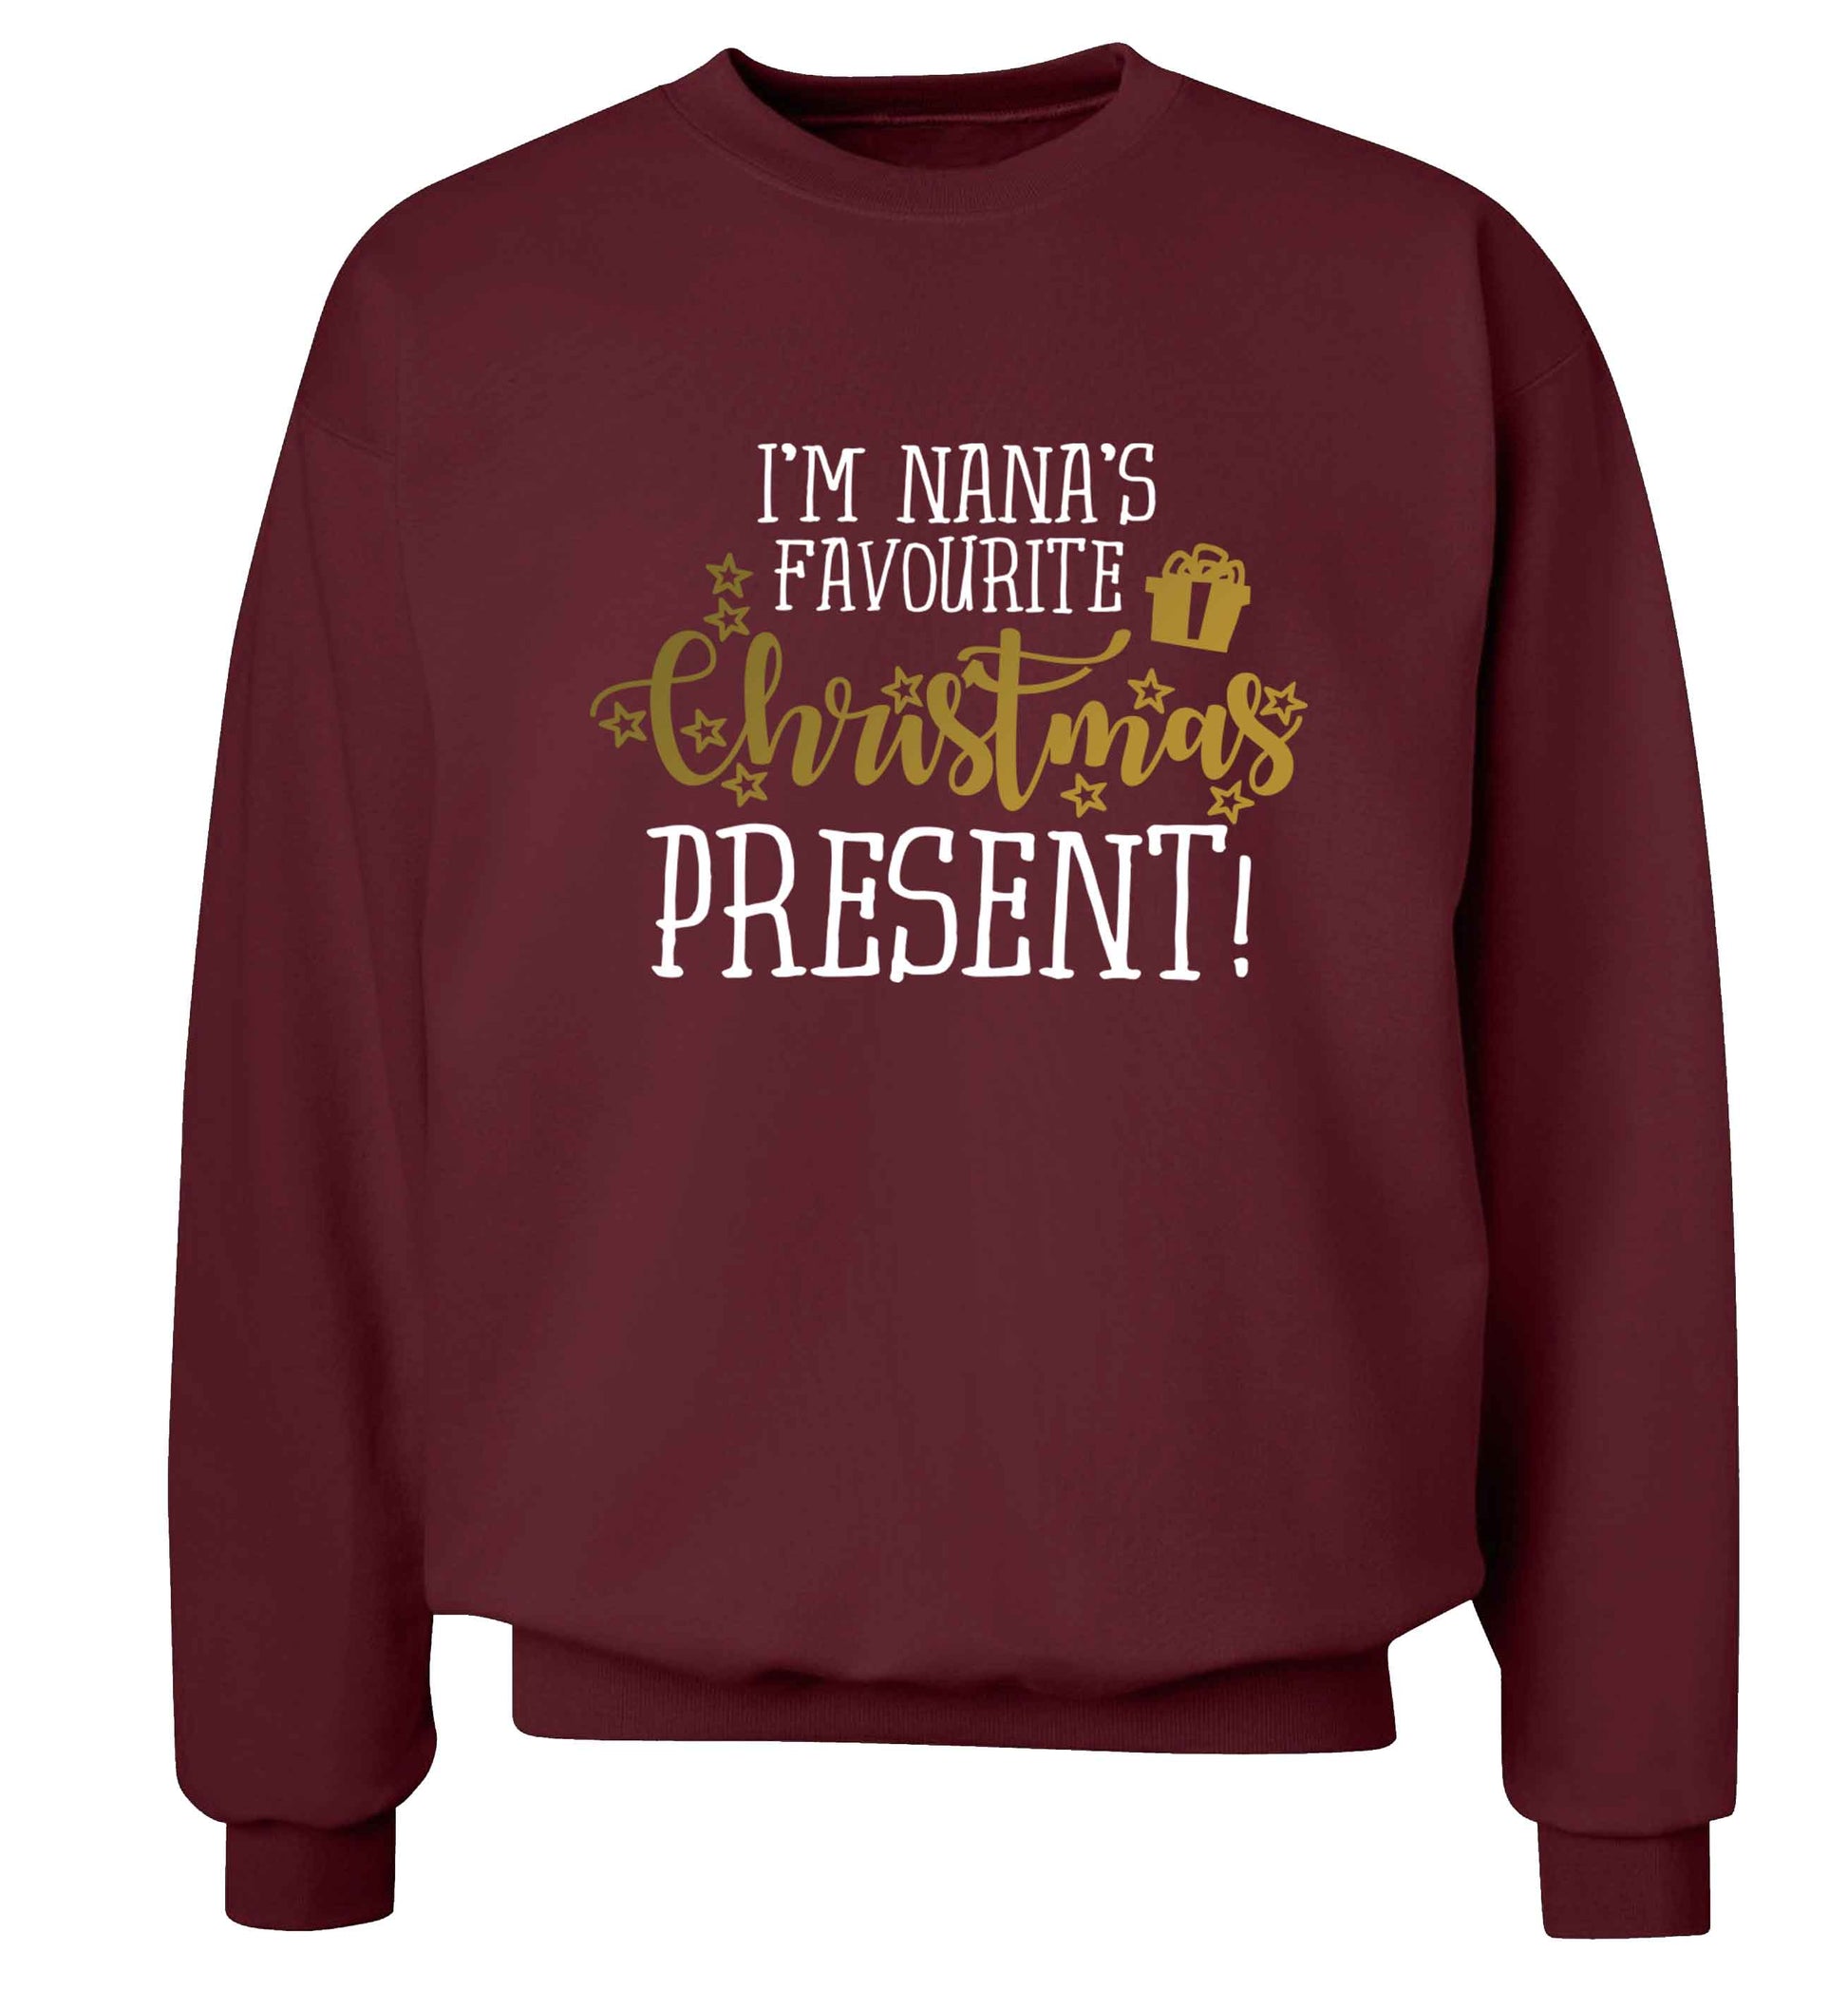 Nana's favourite Christmas present Adult's unisex maroon Sweater 2XL